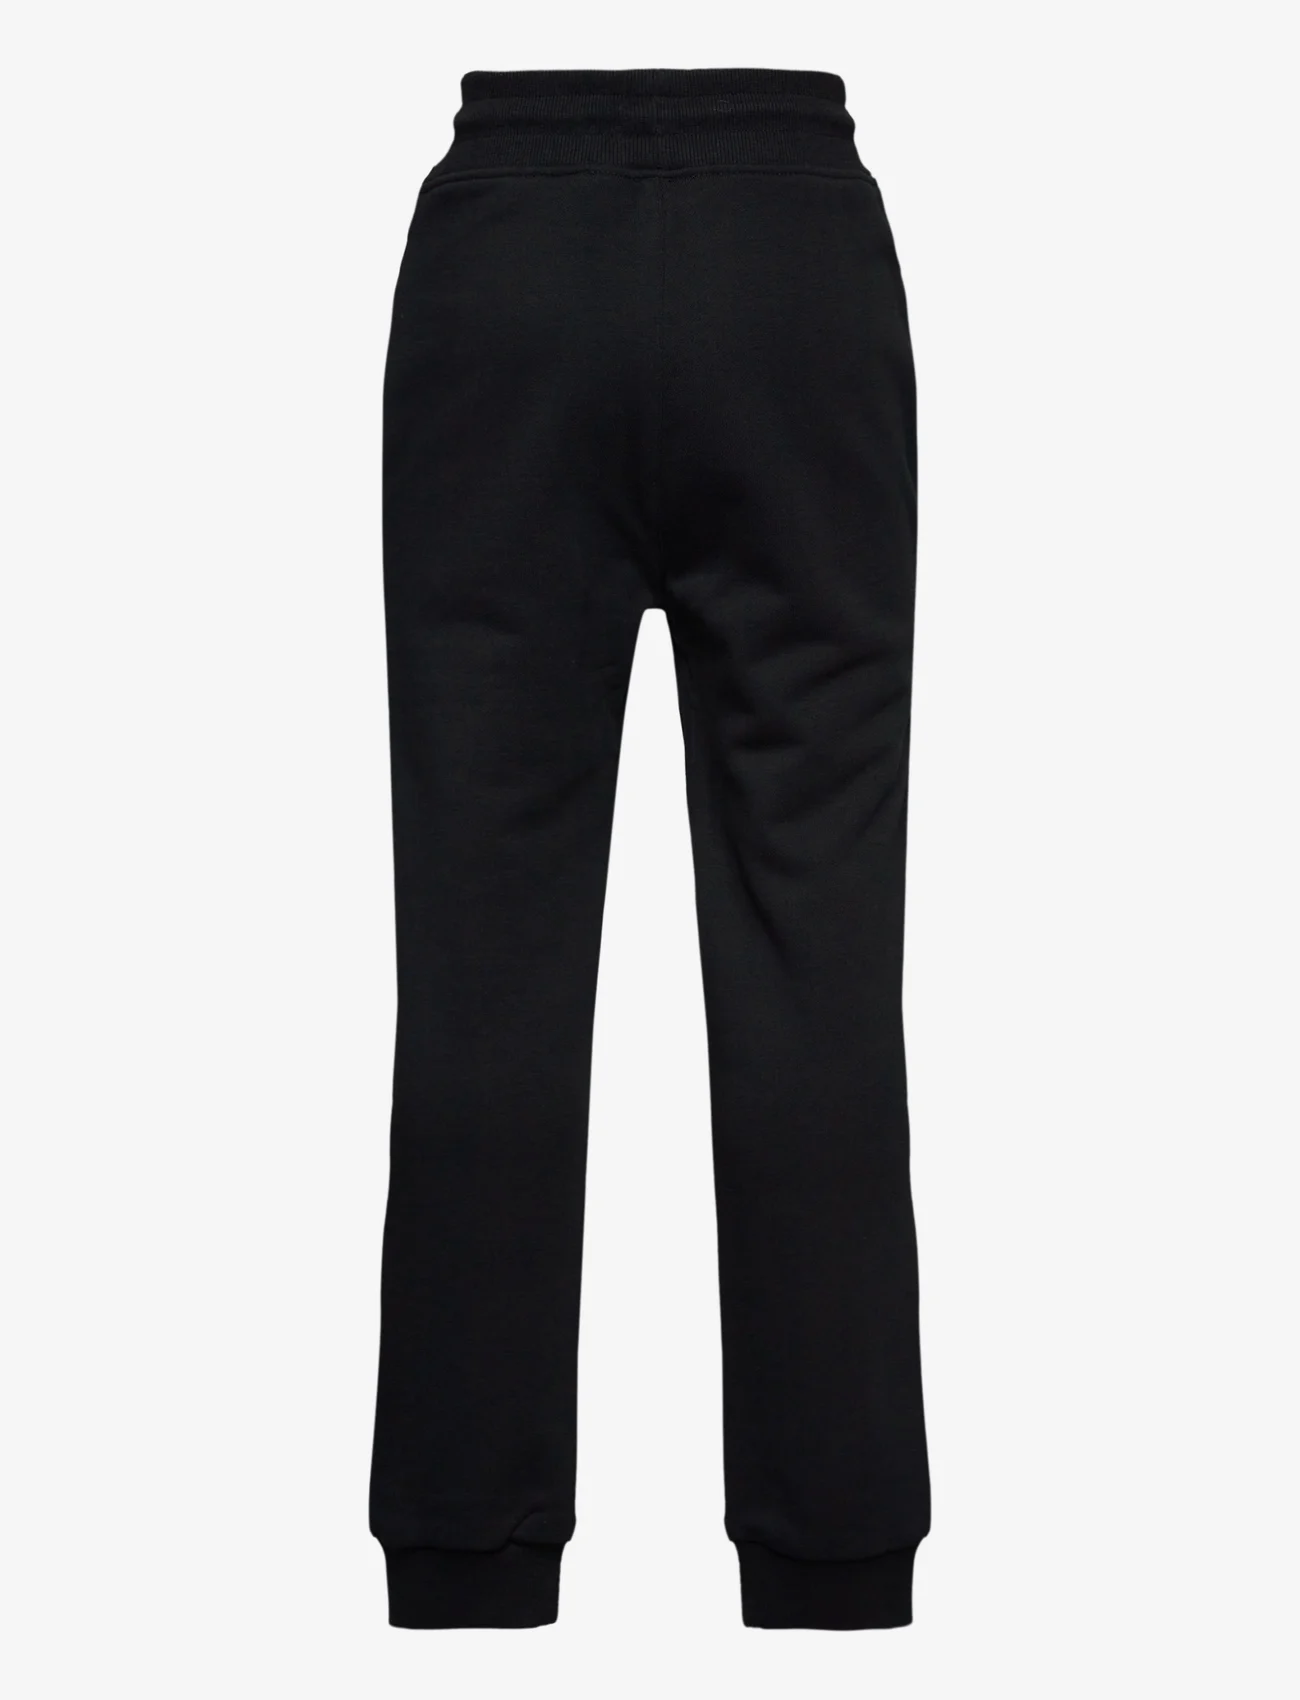 GANT - SHIELD SWEAT PANT - sweatpants - black - 1